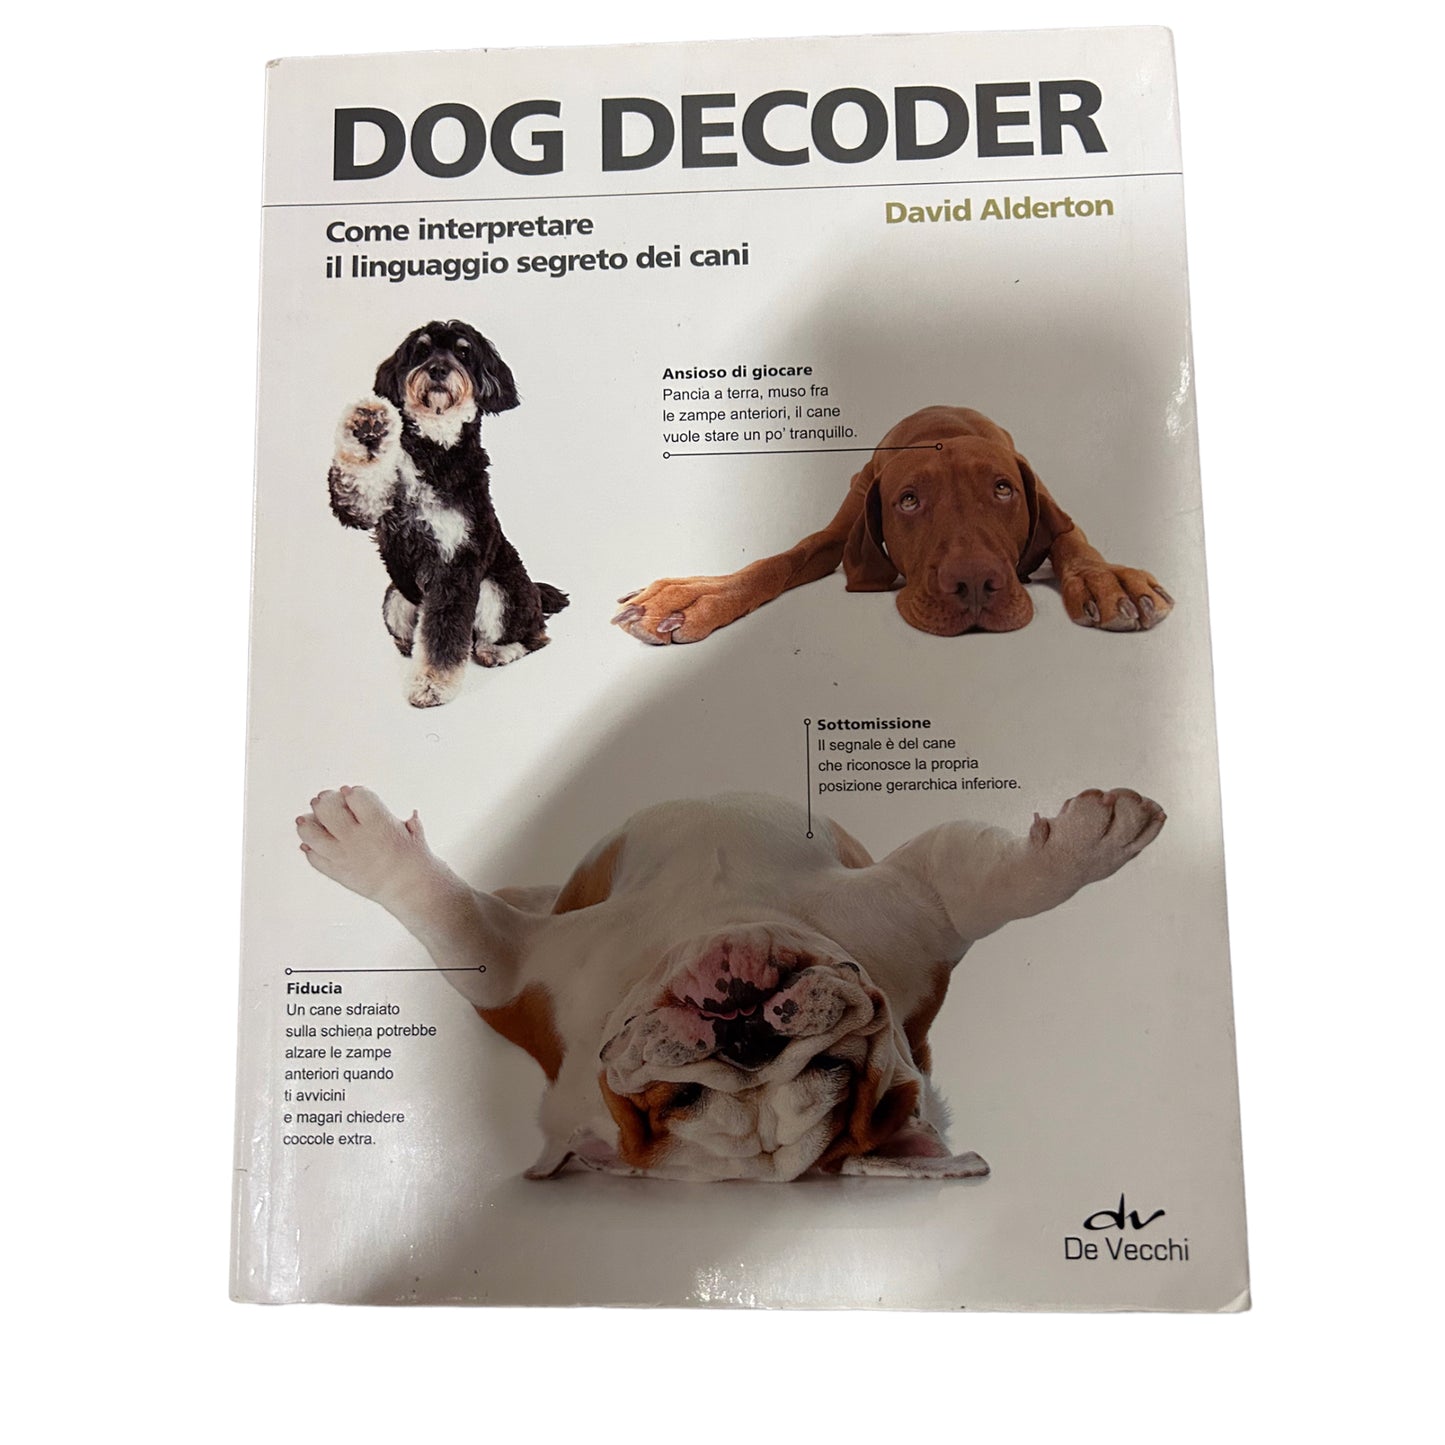 Dog decoder. How to interpret the secret language of dogs